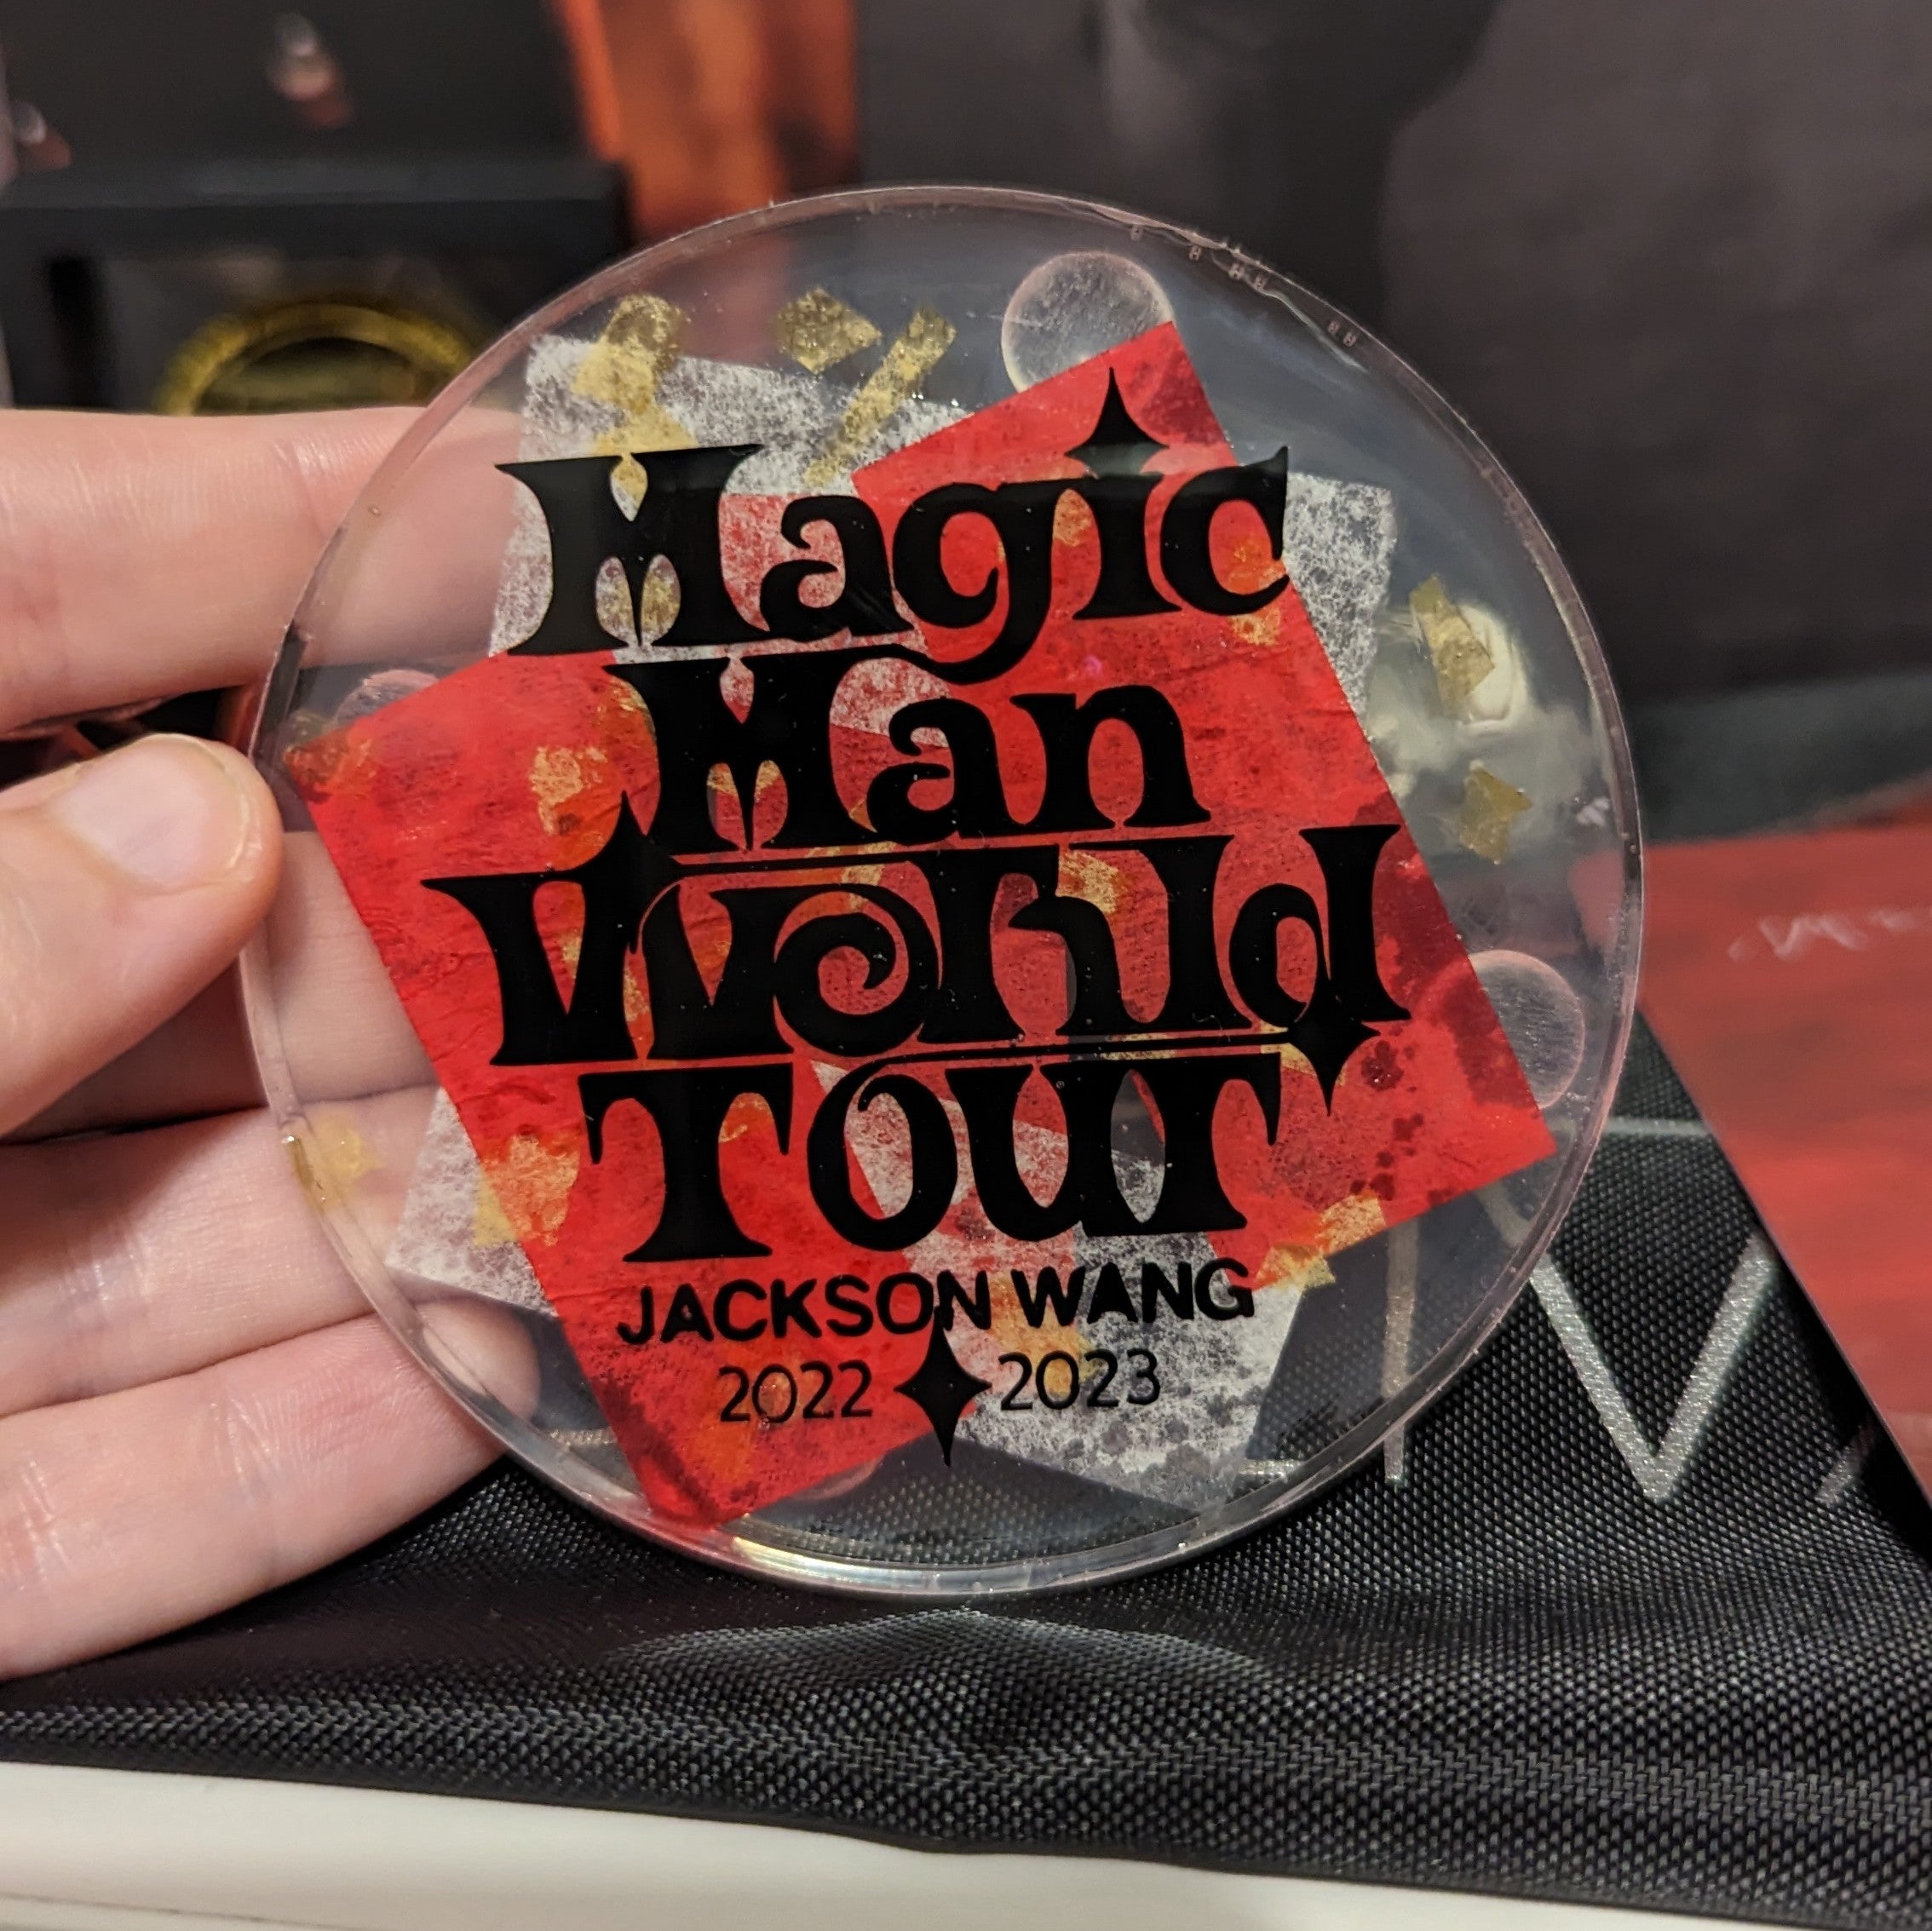 JACKSON WANG MAGIC MAN WORLD TOUR 2023 in South America